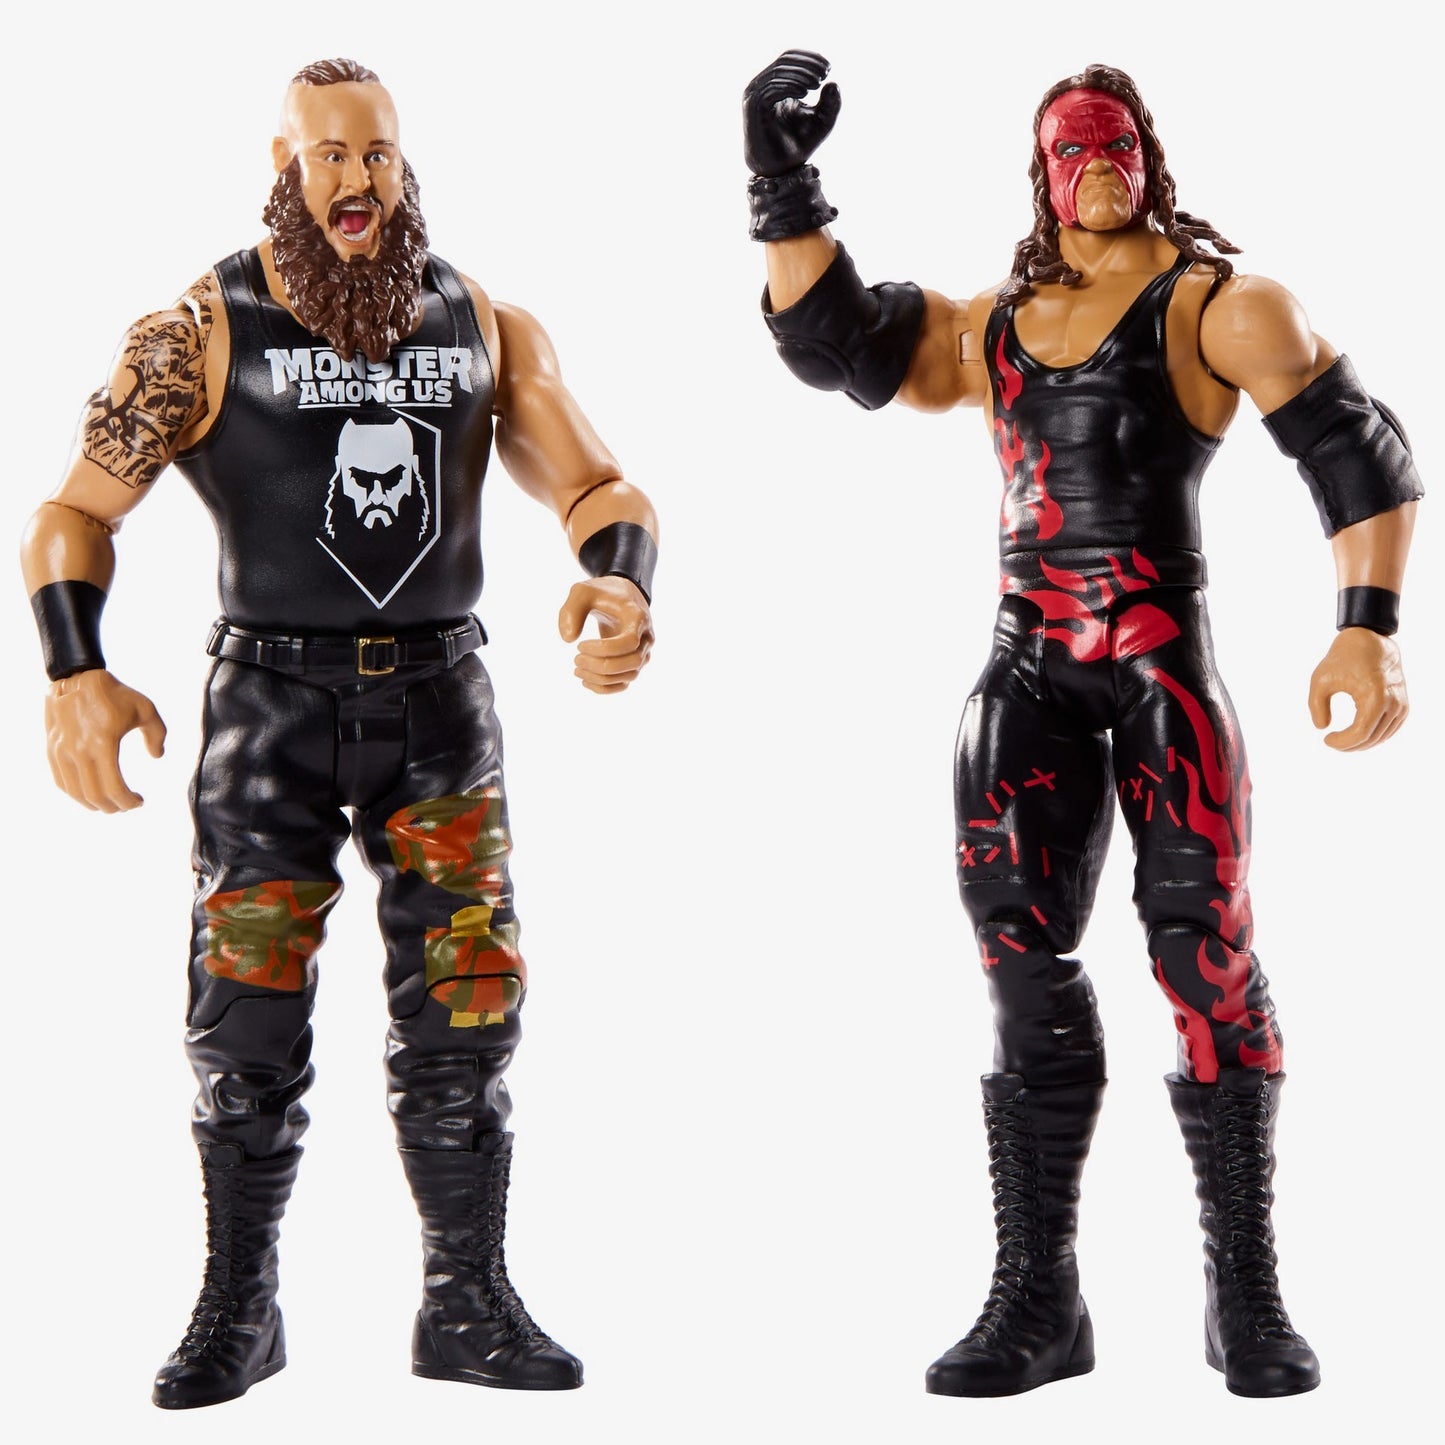 Braun Strowman & Kane - WWE Battle Pack Series #57